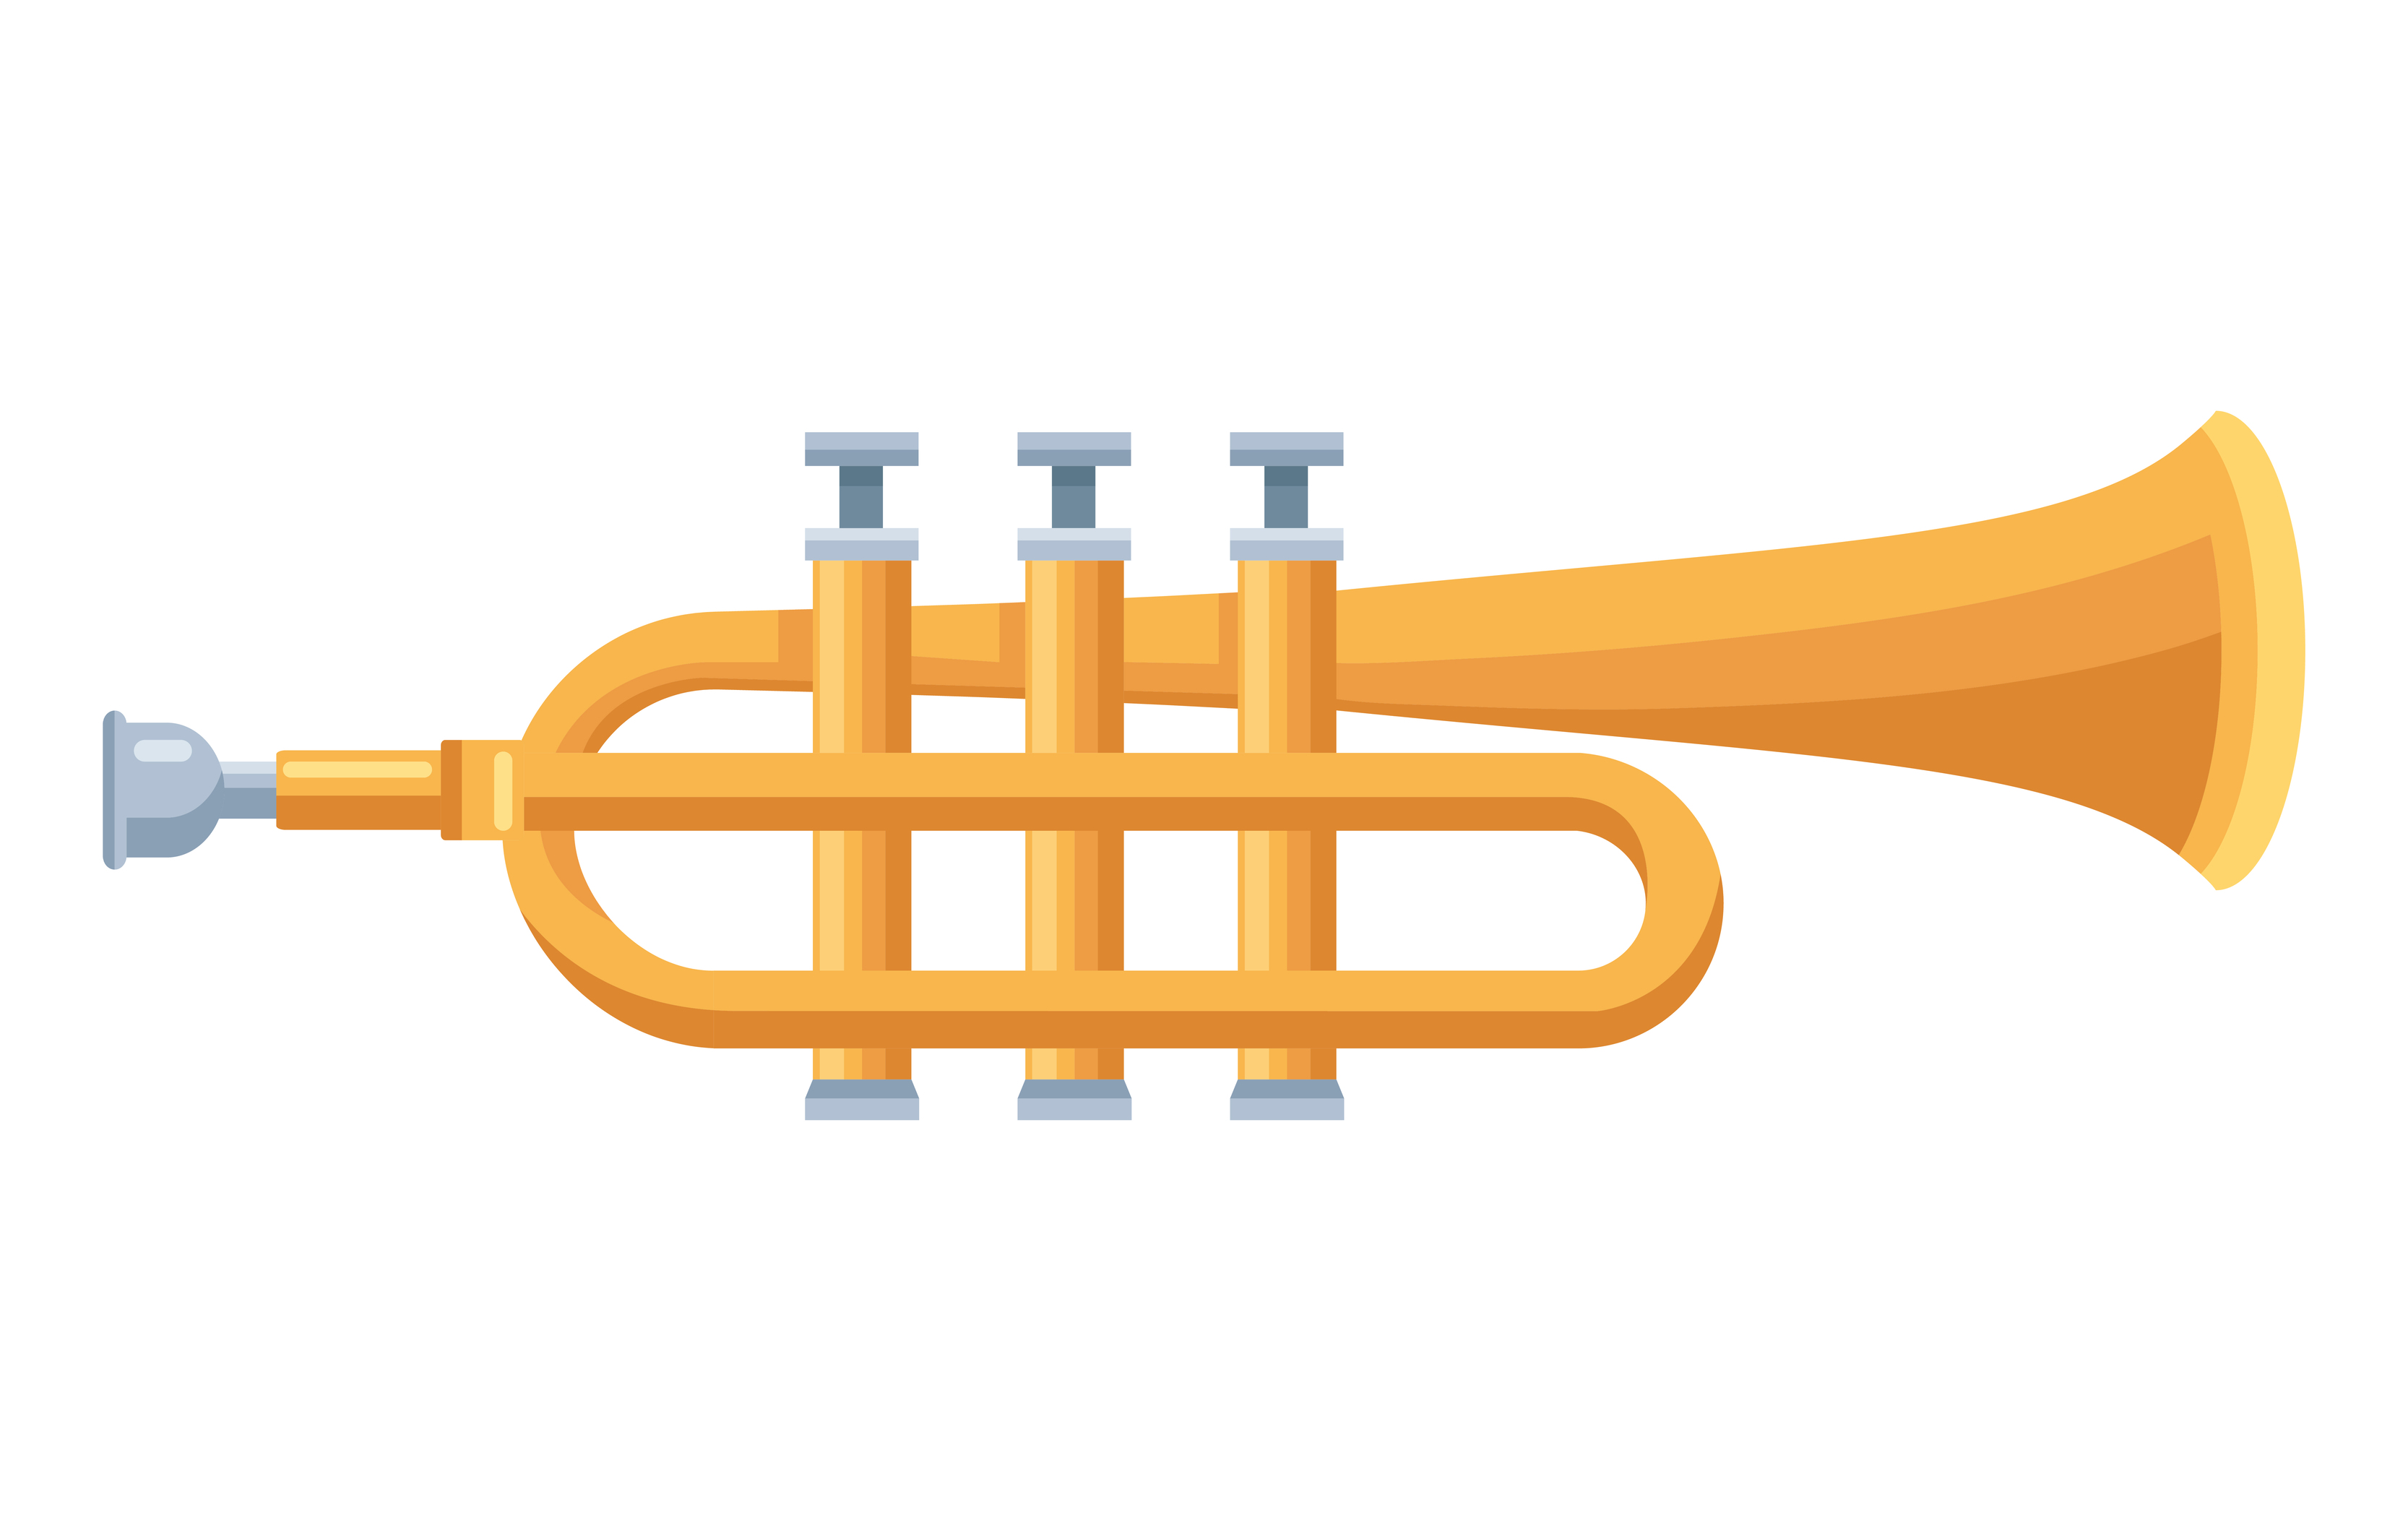 La trompeta instrumento musical